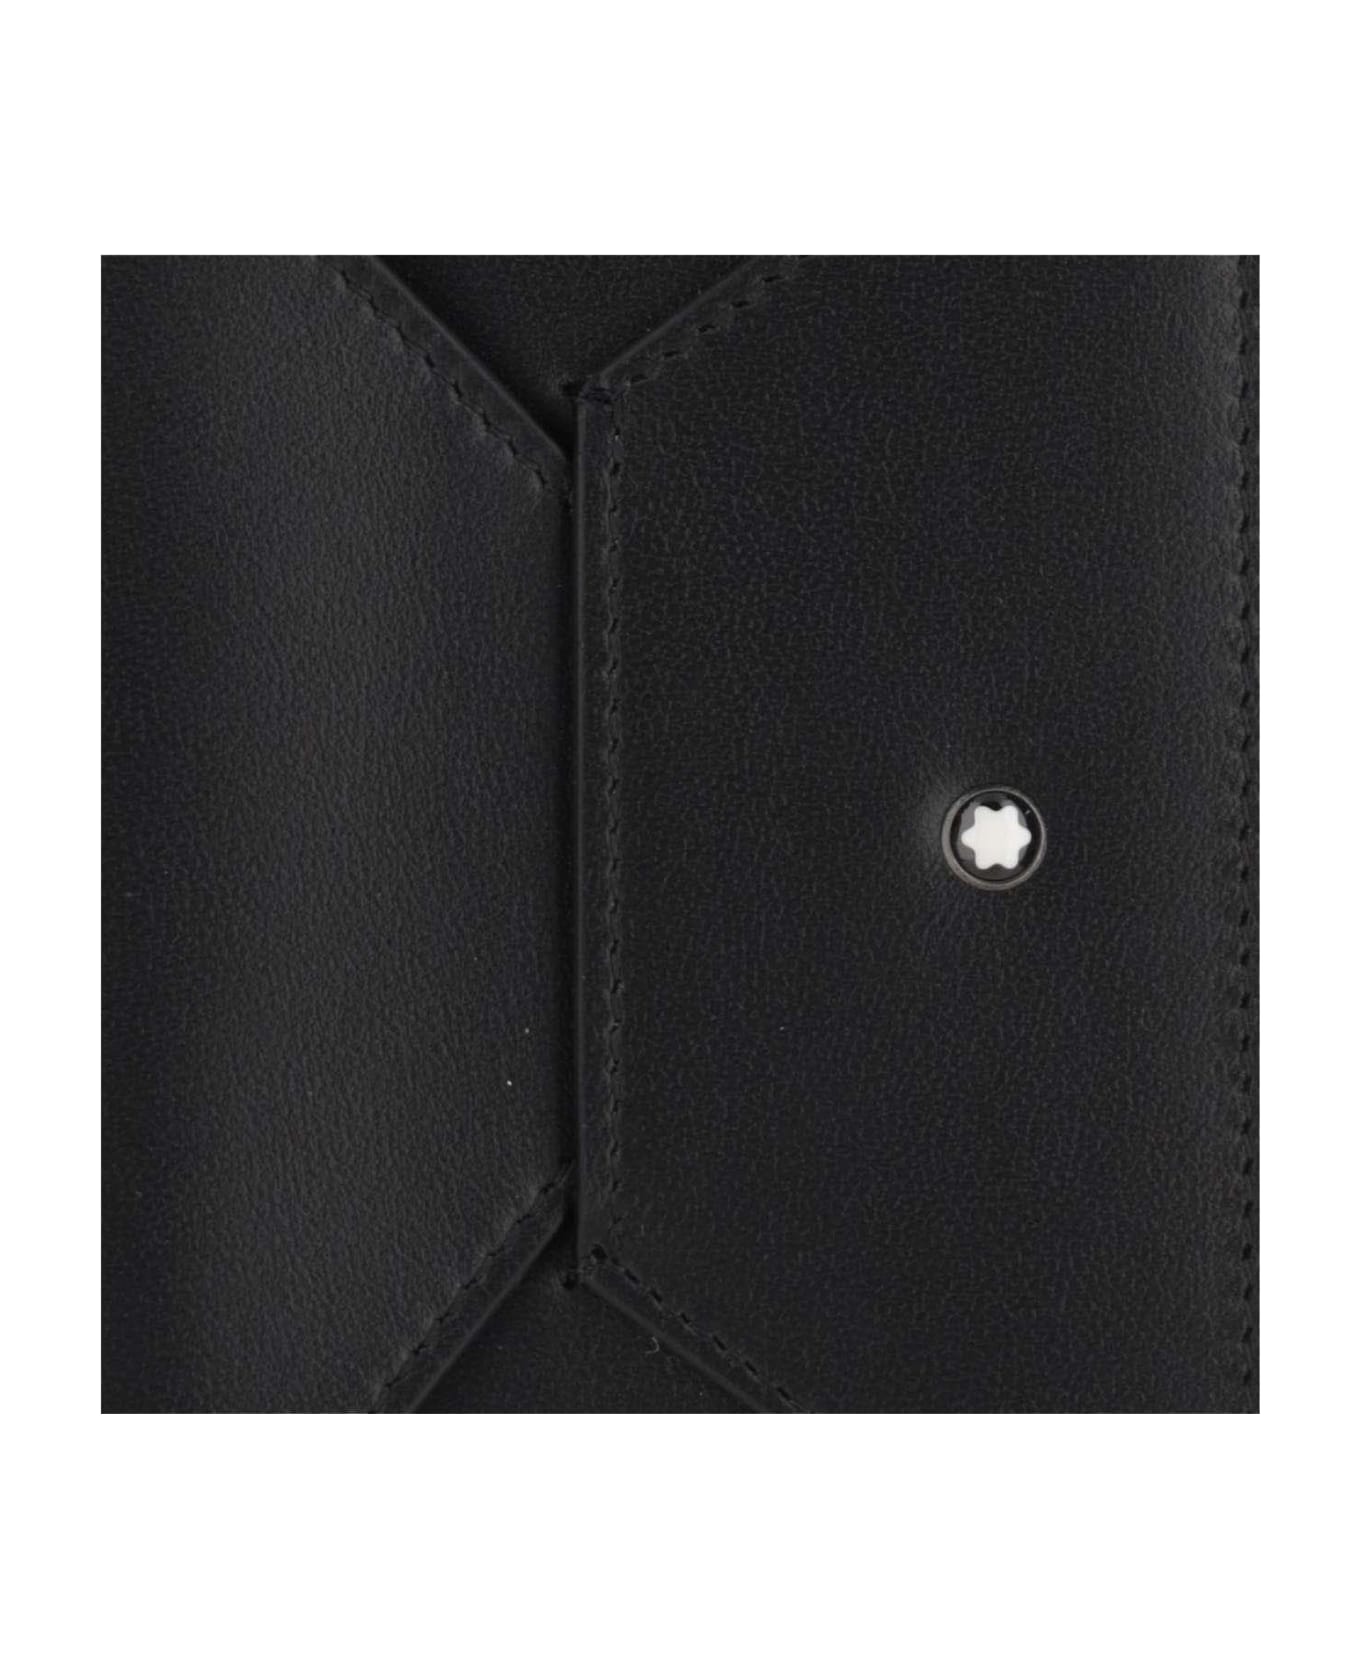 Montblanc Passport Case Meisterstück Selection Soft - Black